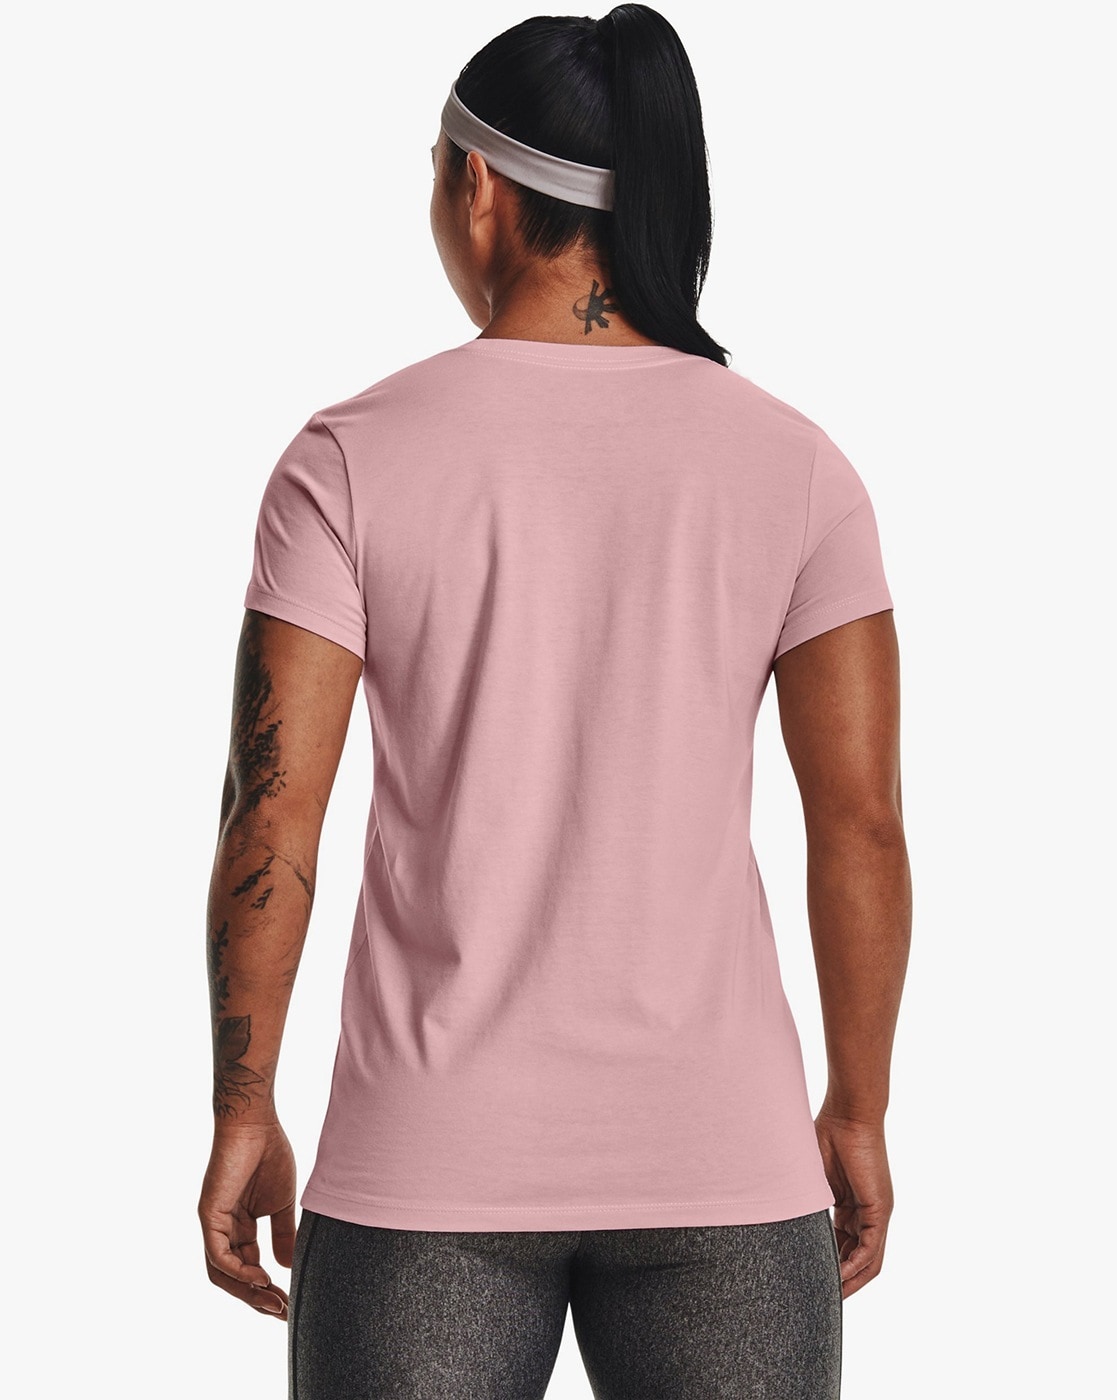 BodyTalk ''Lessismore'' Women's Sweatshirt Pink 1232 - 904226/00396 -  T-shirt Homme Citru Gris